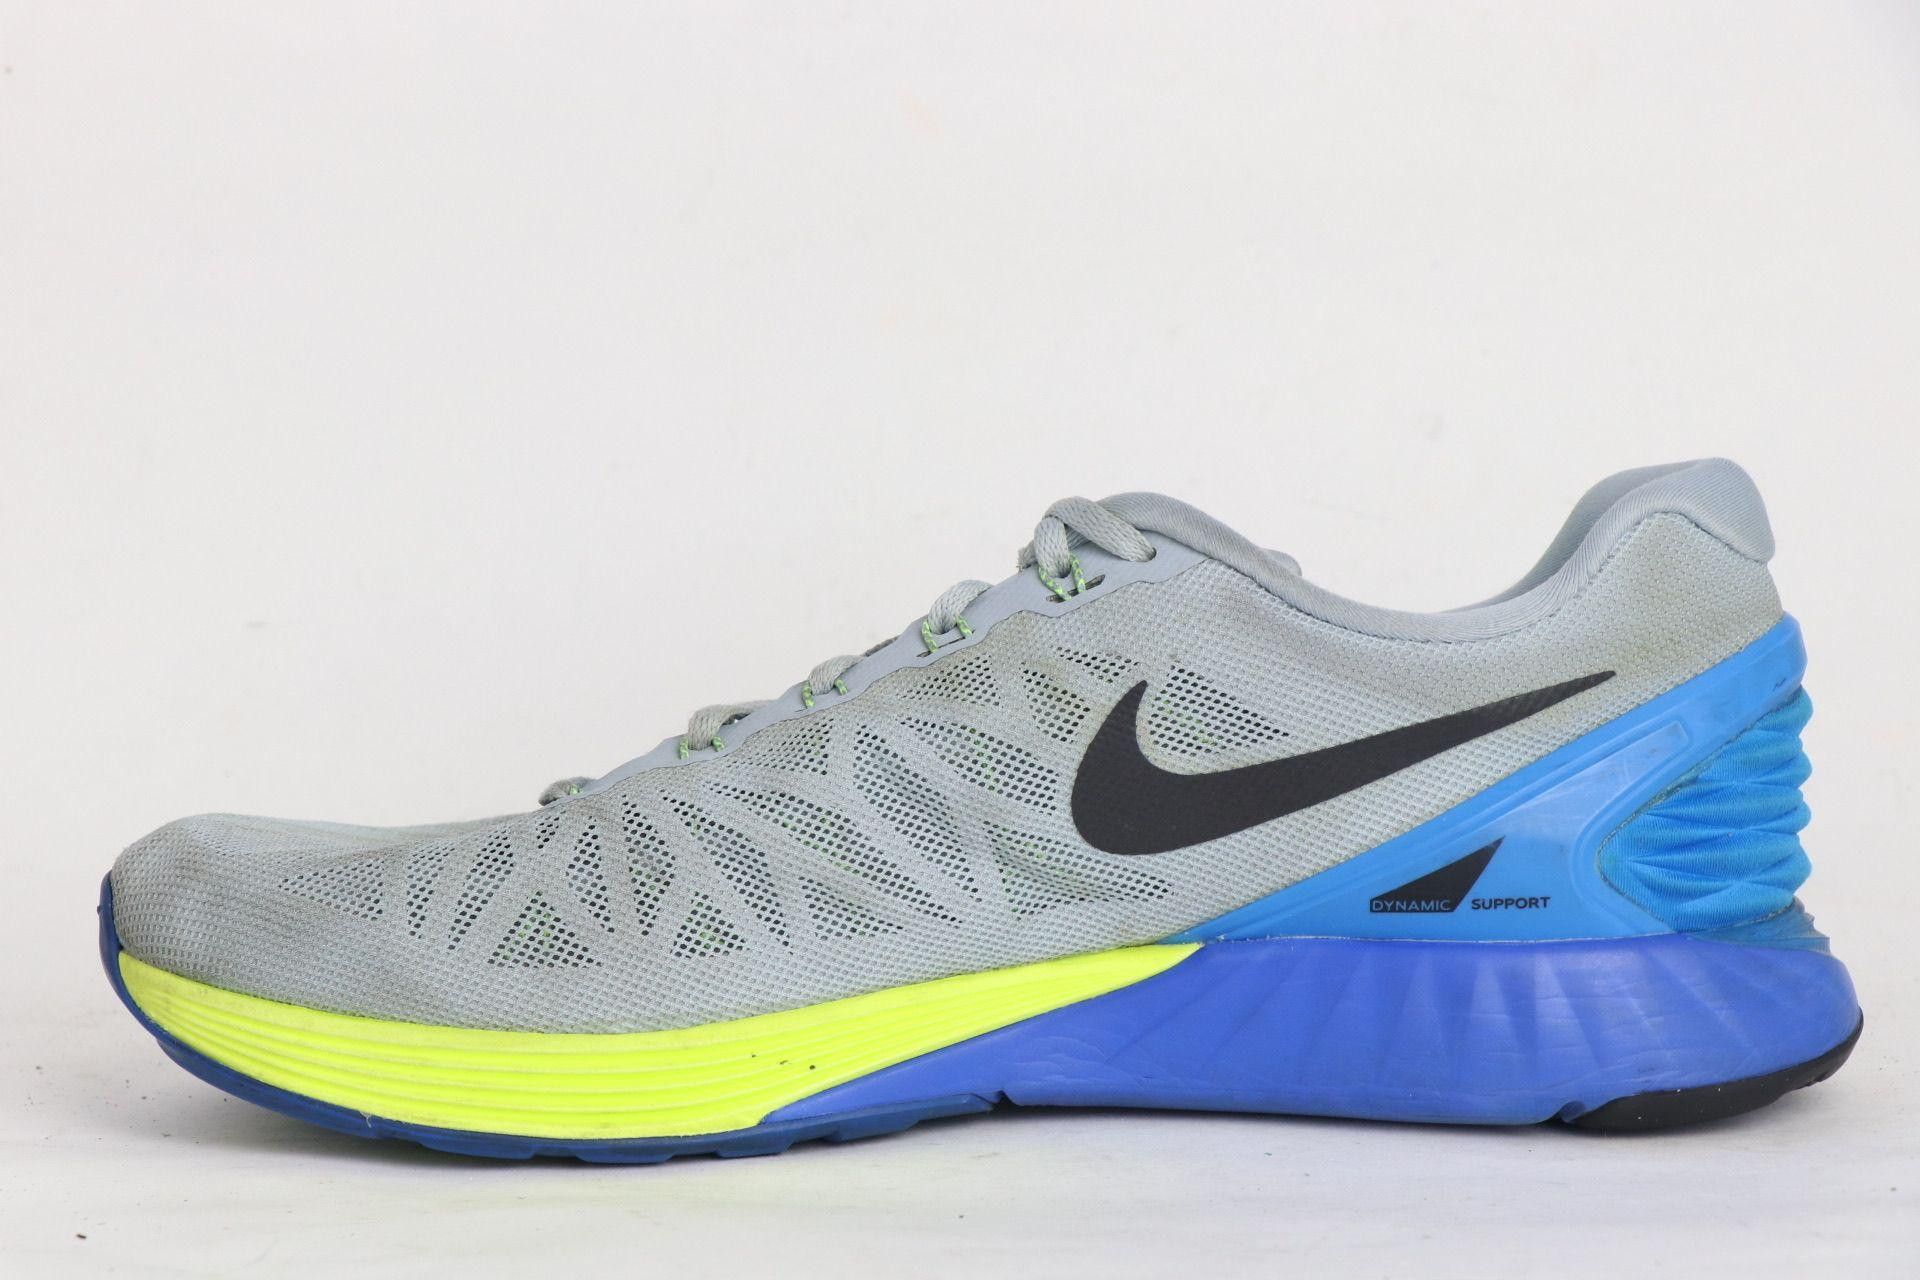 Nike Nike Lunarlon Dynamic Support Running Shoes Size 12 US |